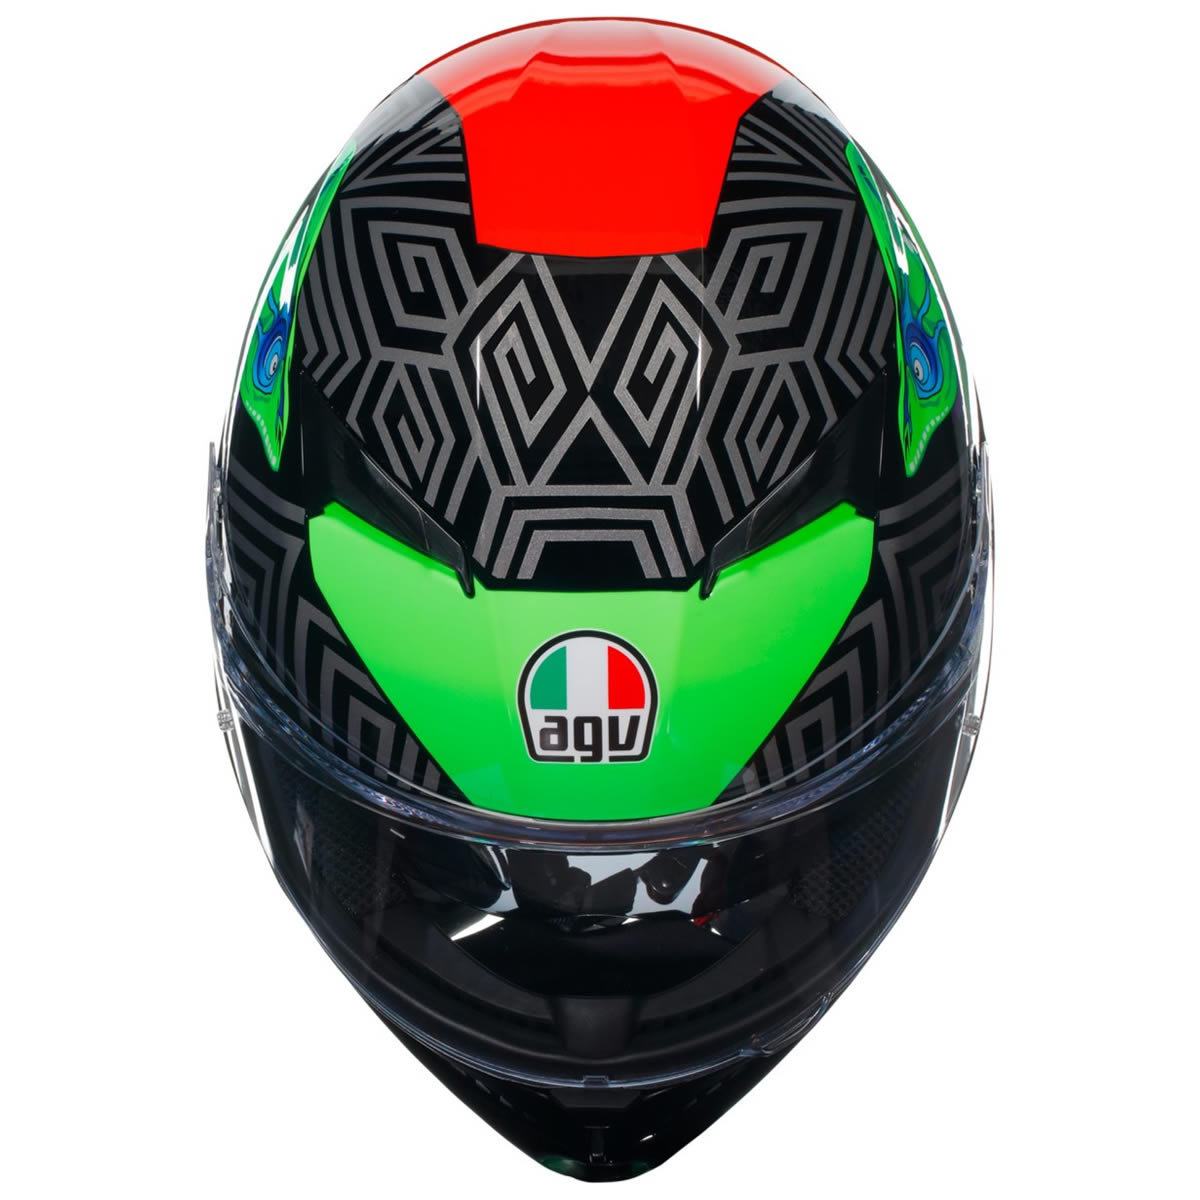 AGV K3 Kamaleon Helm, schwarz-rot-grün